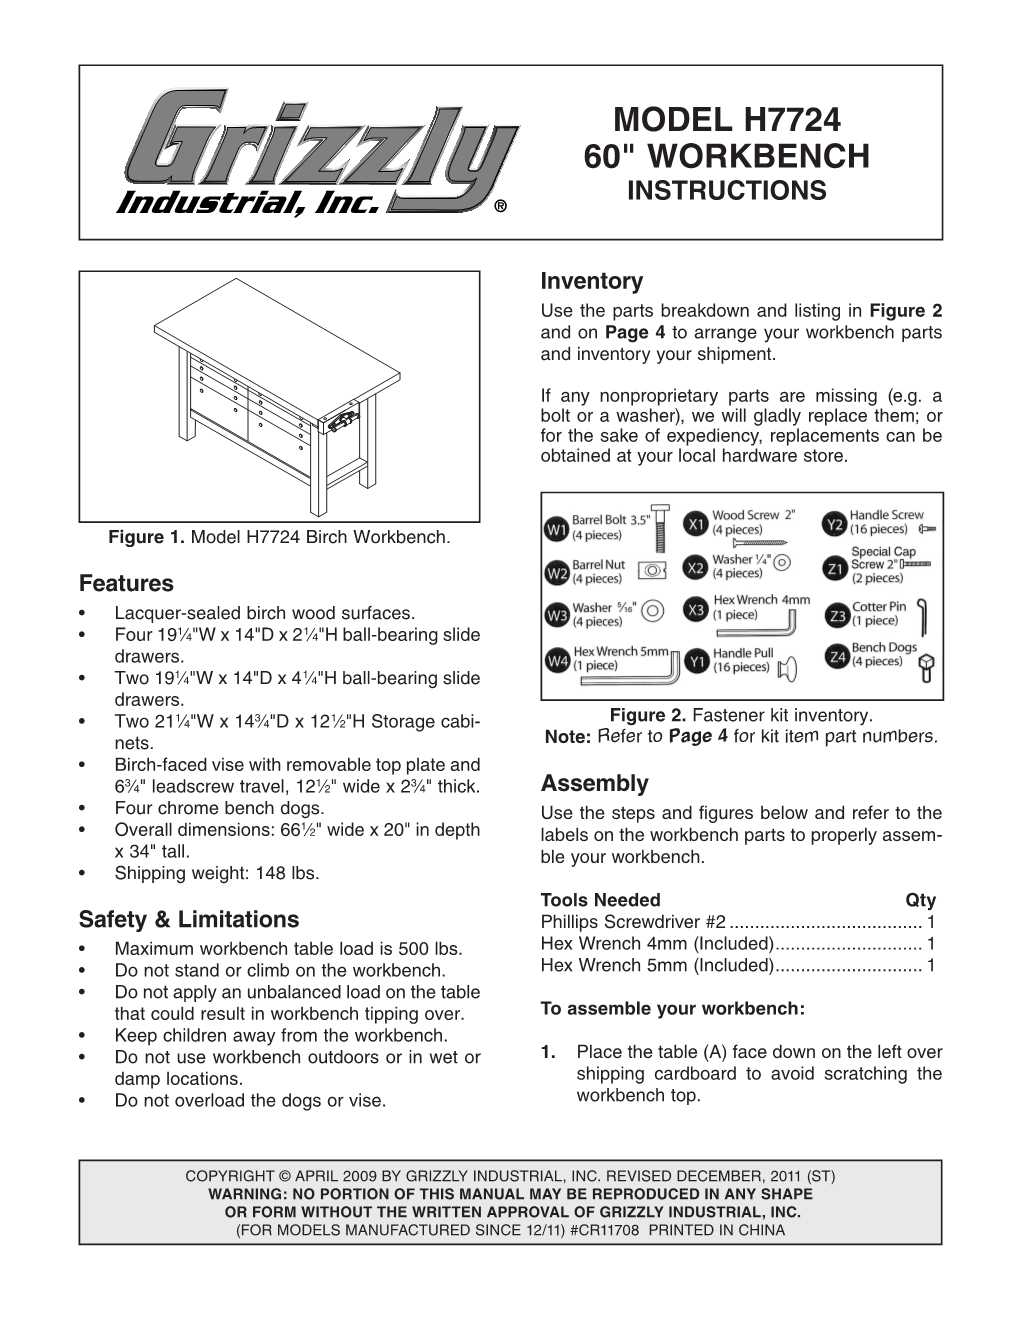 Model H7724 60" Workbench Instructions